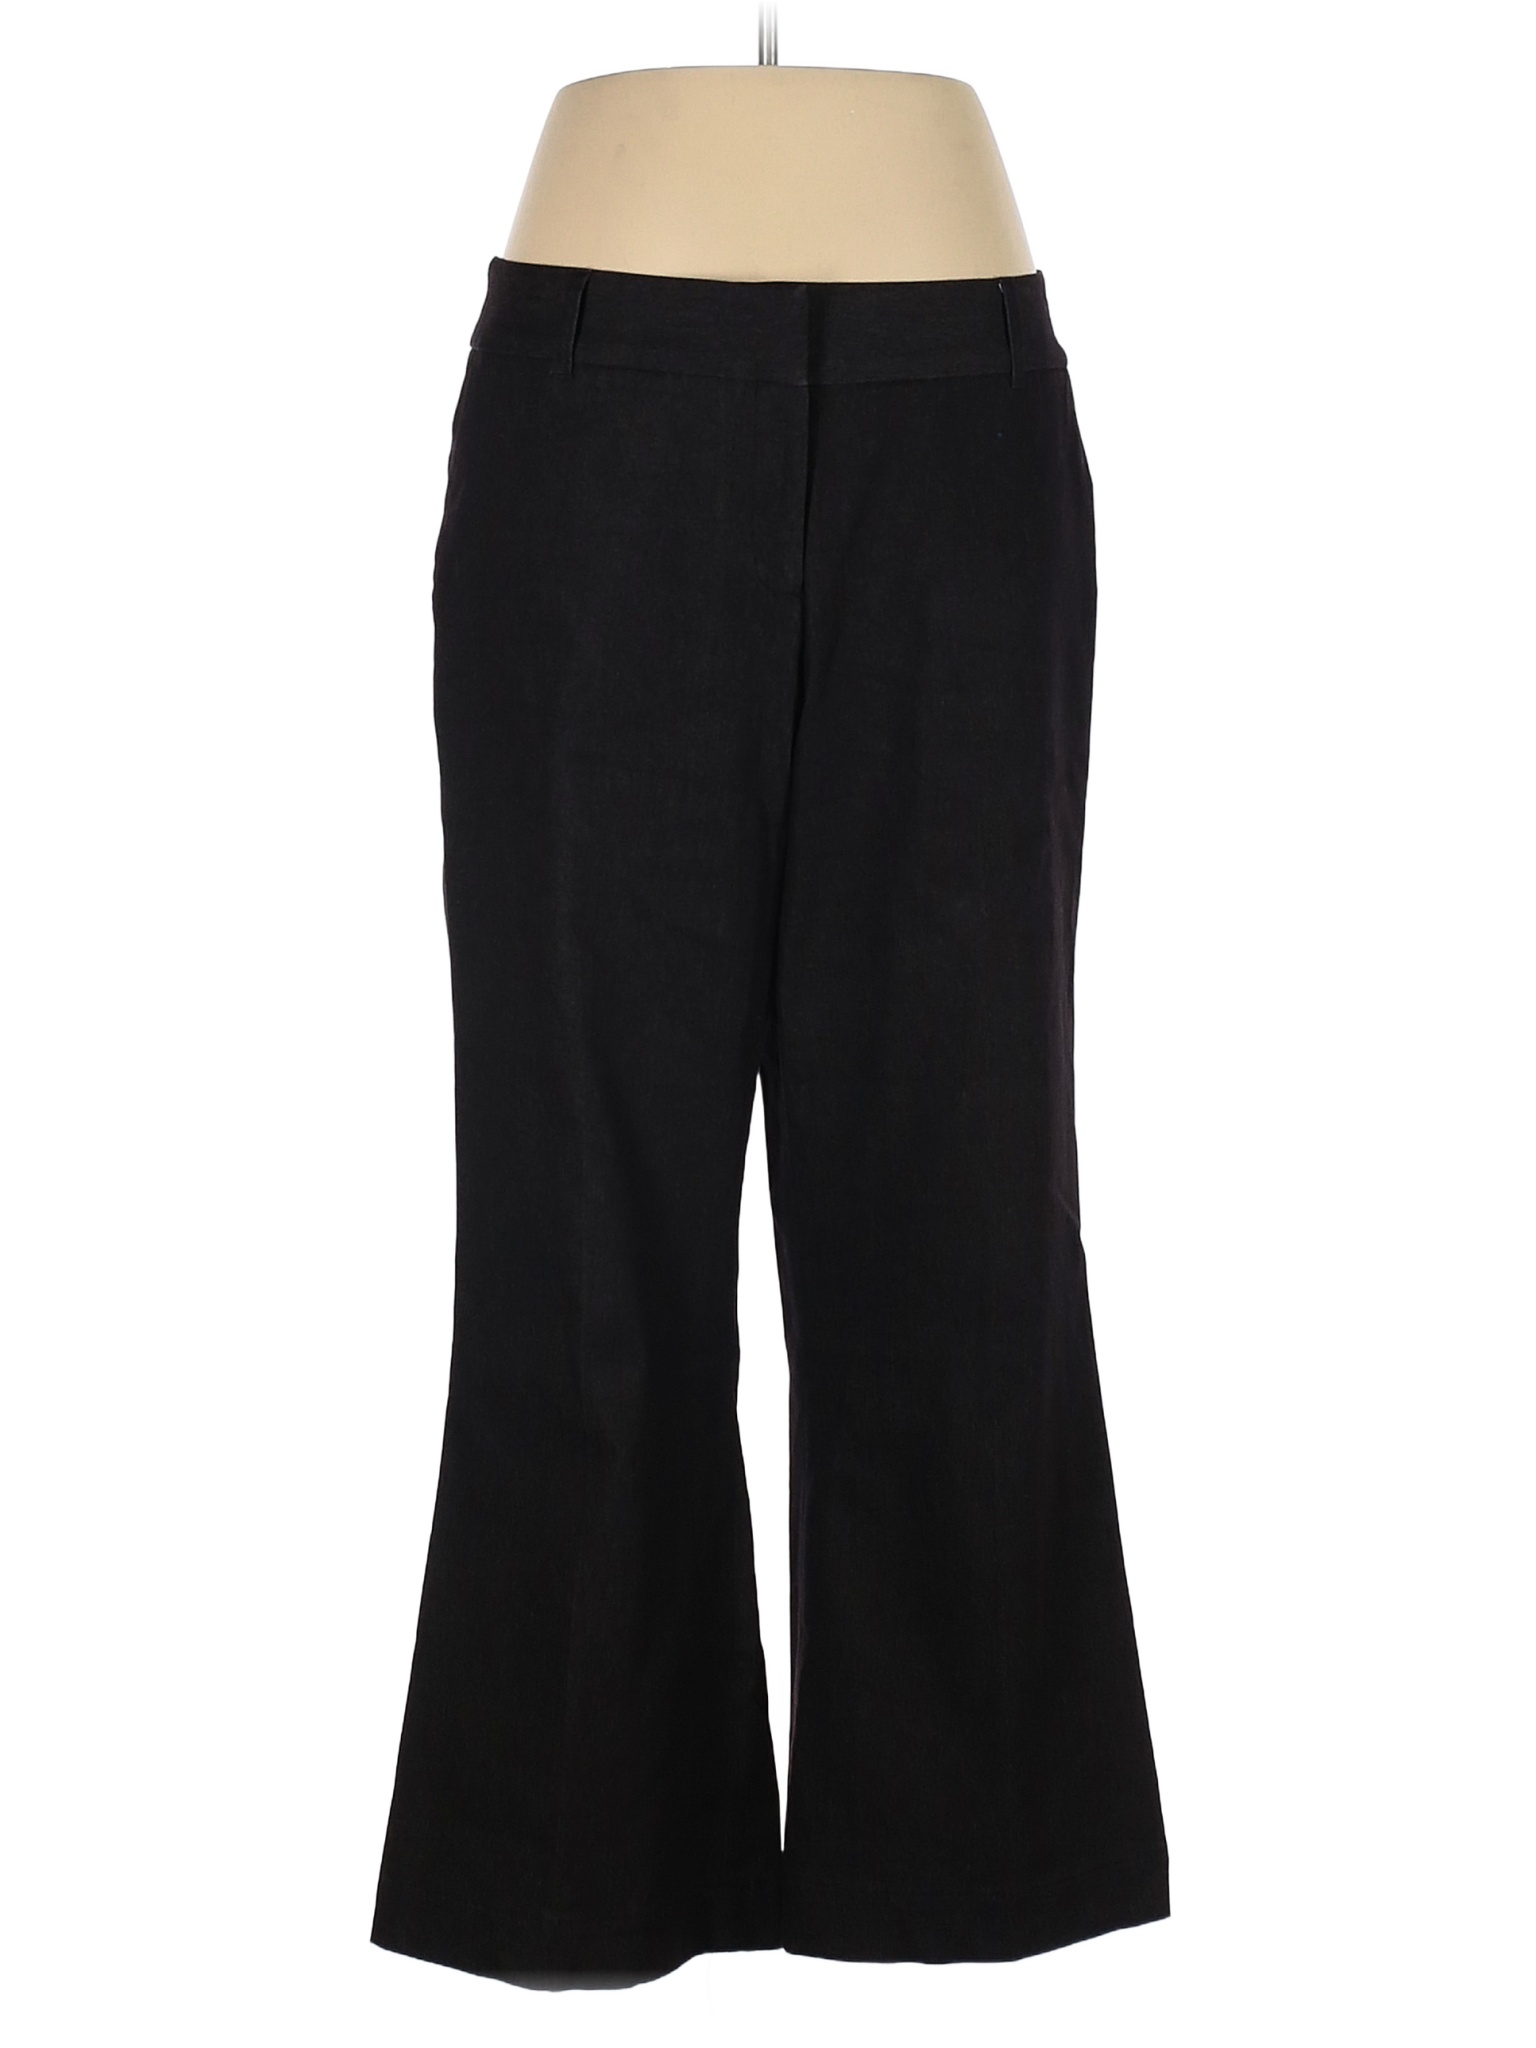 Dalia Collection Black Brown Dress Pants Size 14 - 64% off | thredUP